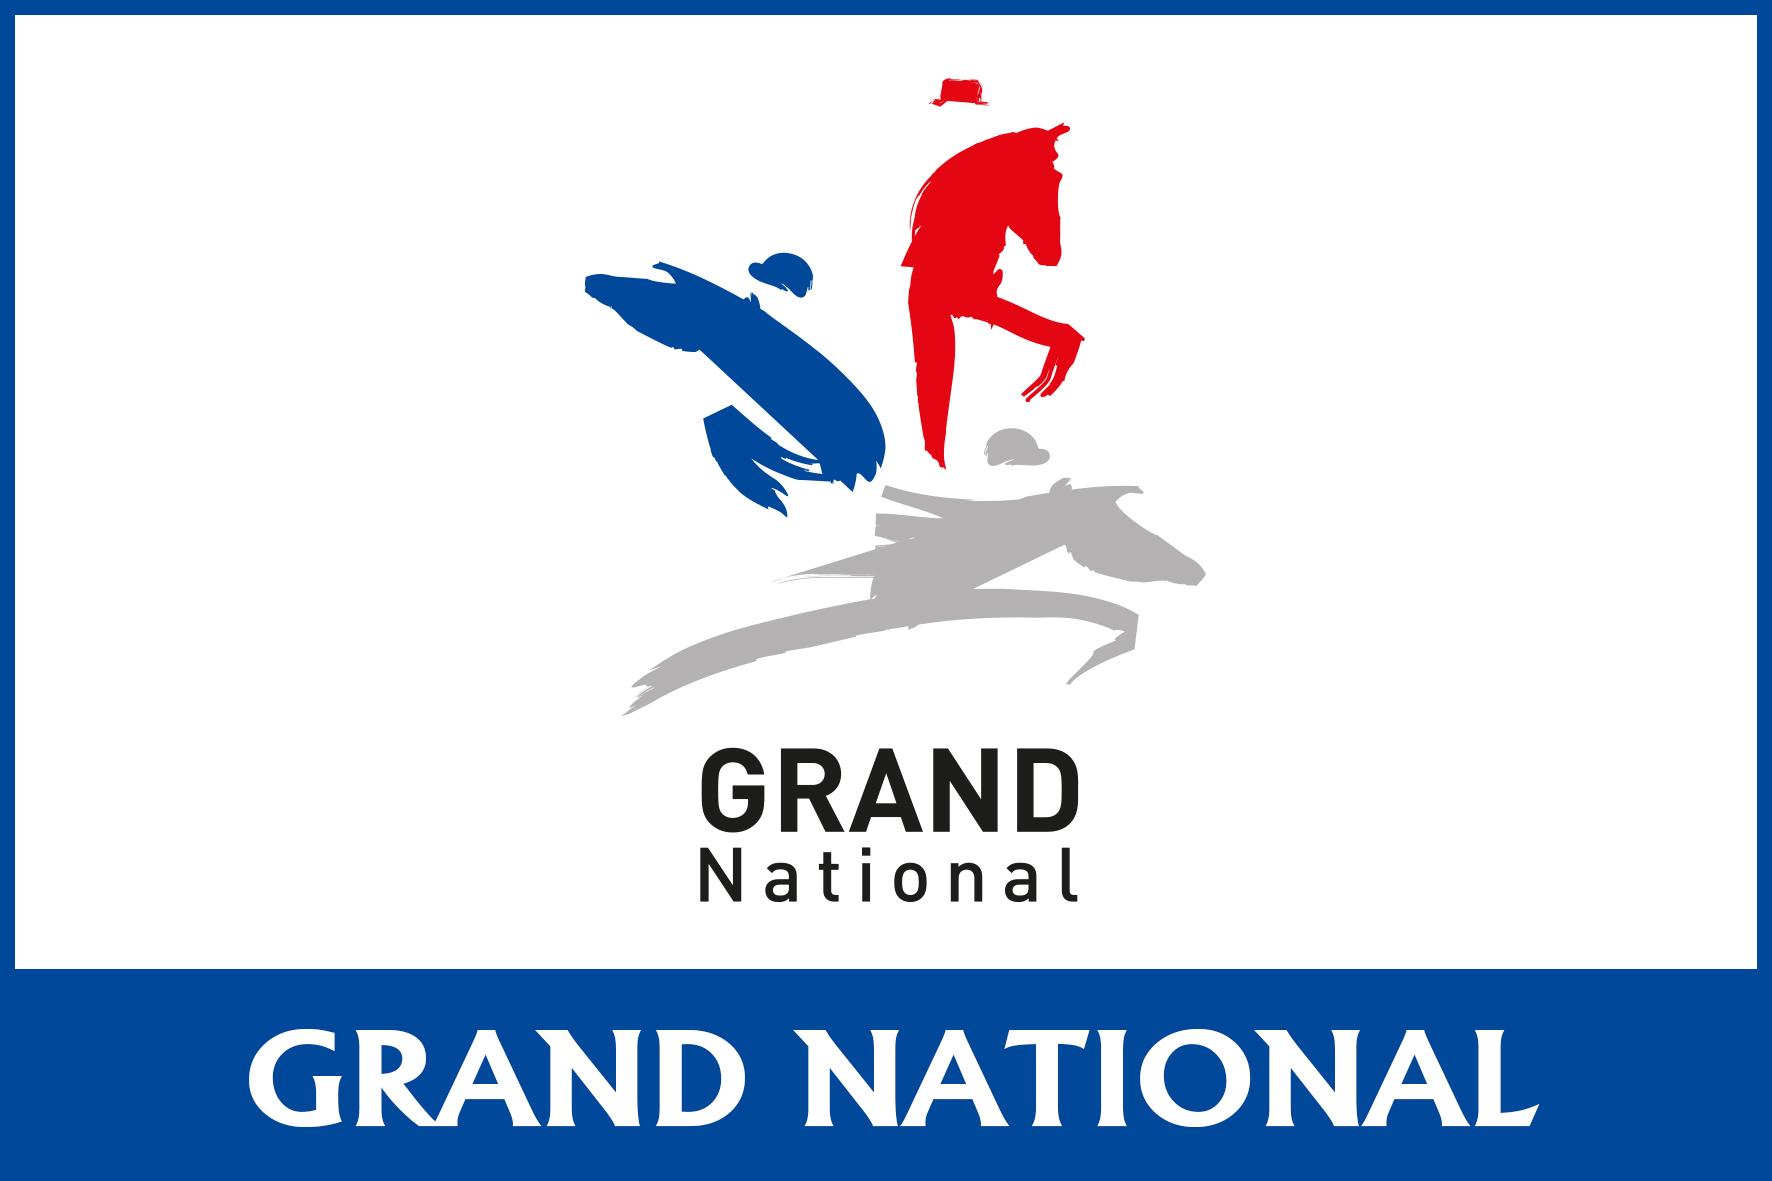 Grand national